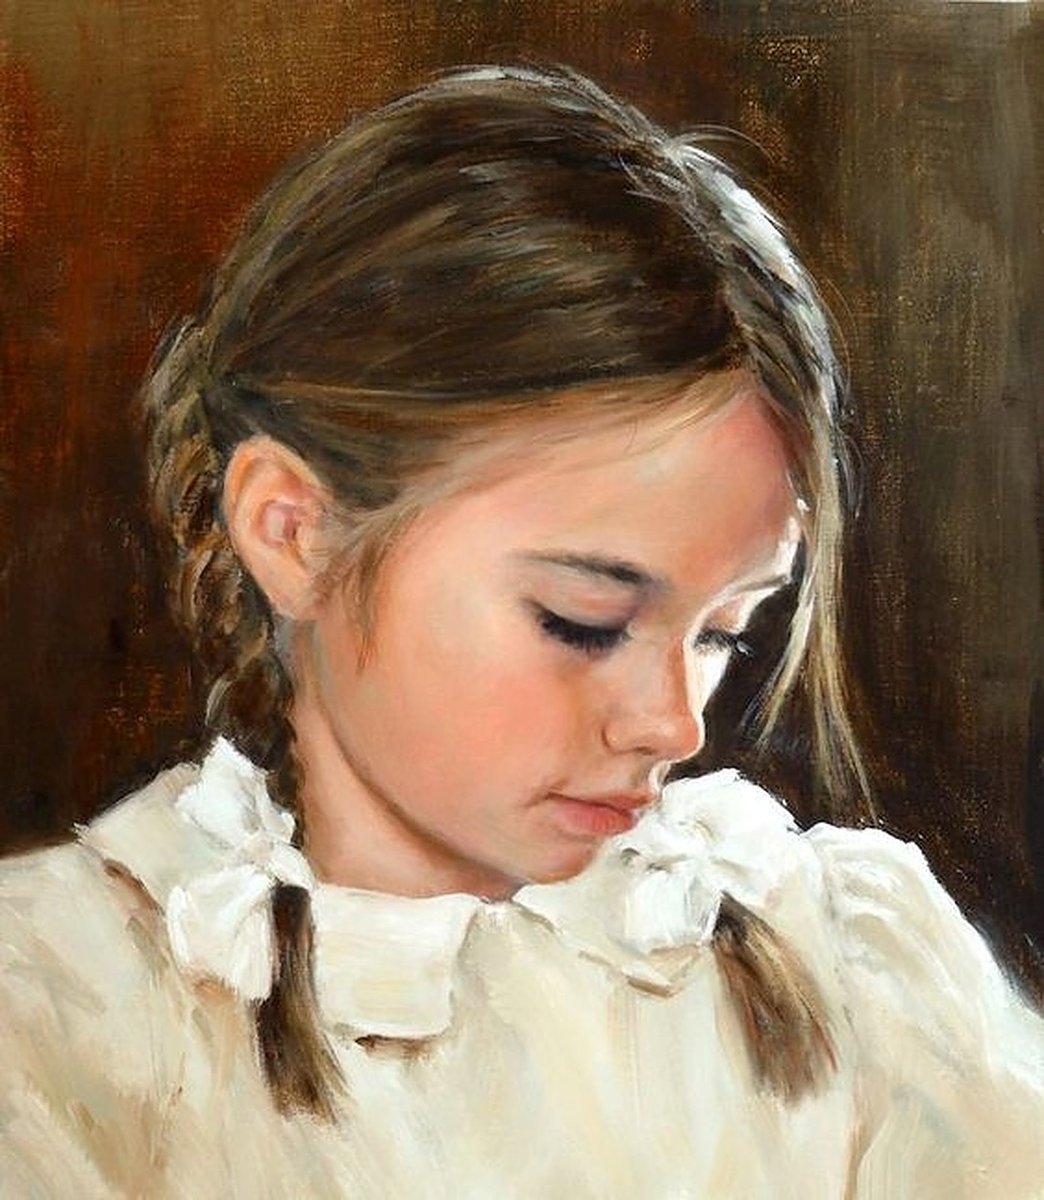 Cynthia Feustel
#classical #oilpainting #portrait #girl #realism #American #artist #figurative #art